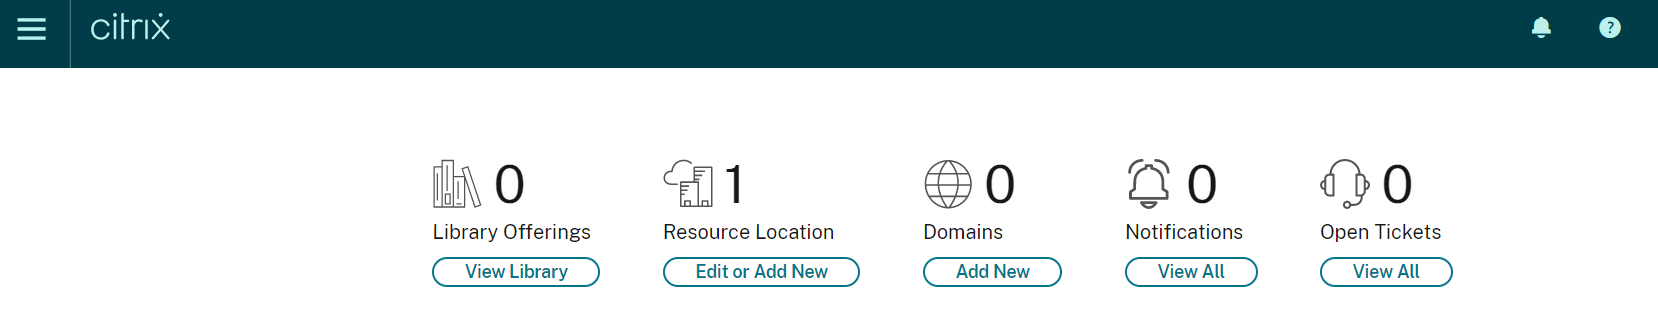 Citrix DaaS - New Resource Location